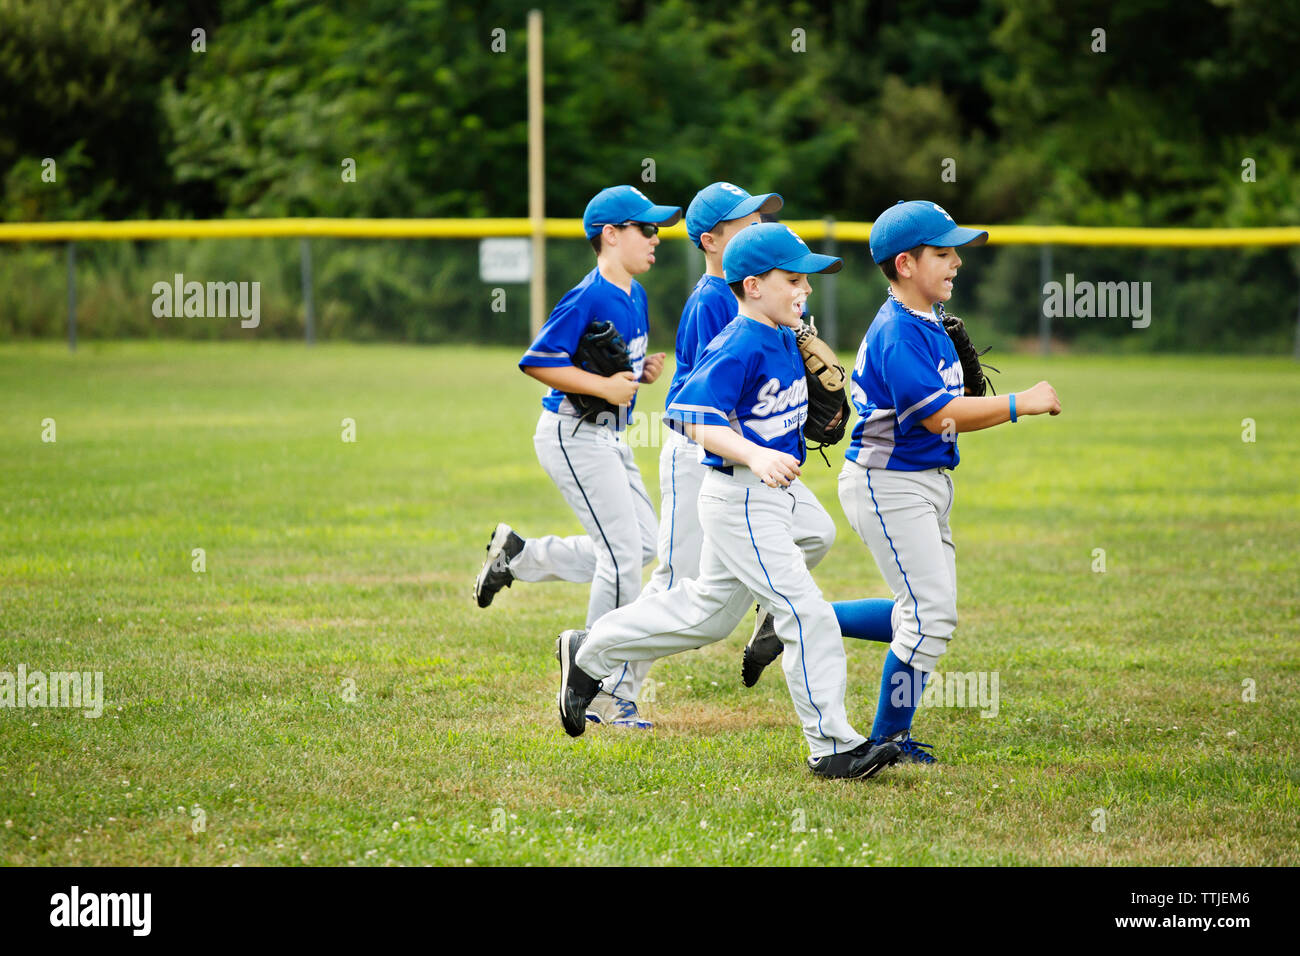 Baseball players running on grassy field Stock Photo